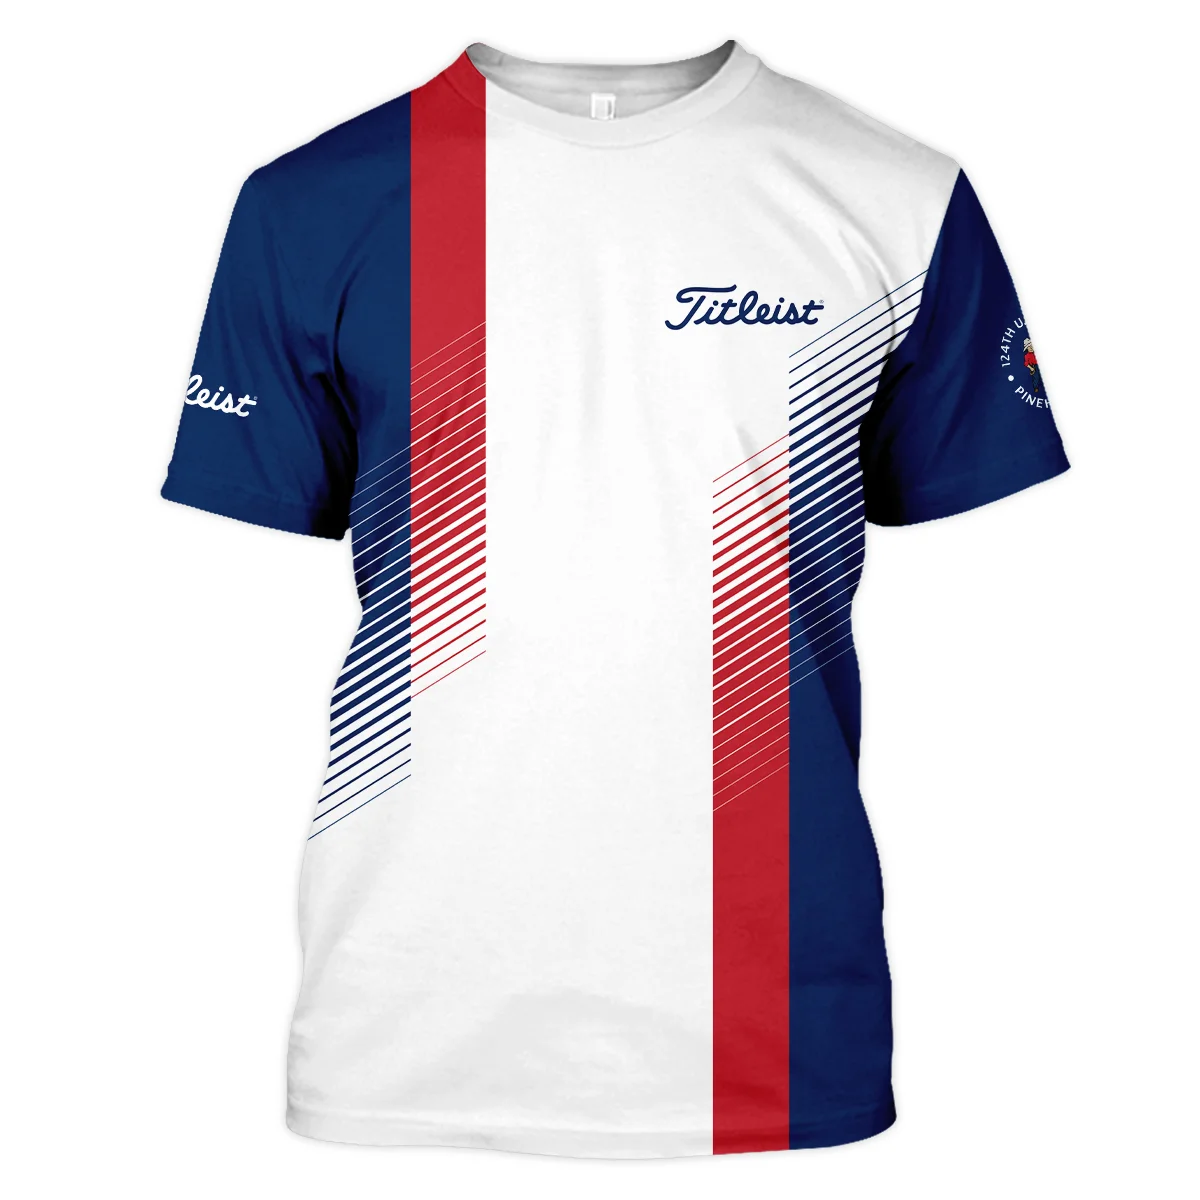 Sport Titleist 124th U.S. Open Pinehurst Golf Unisex T-Shirt Blue Red Striped Pattern White All Over Print T-Shirt